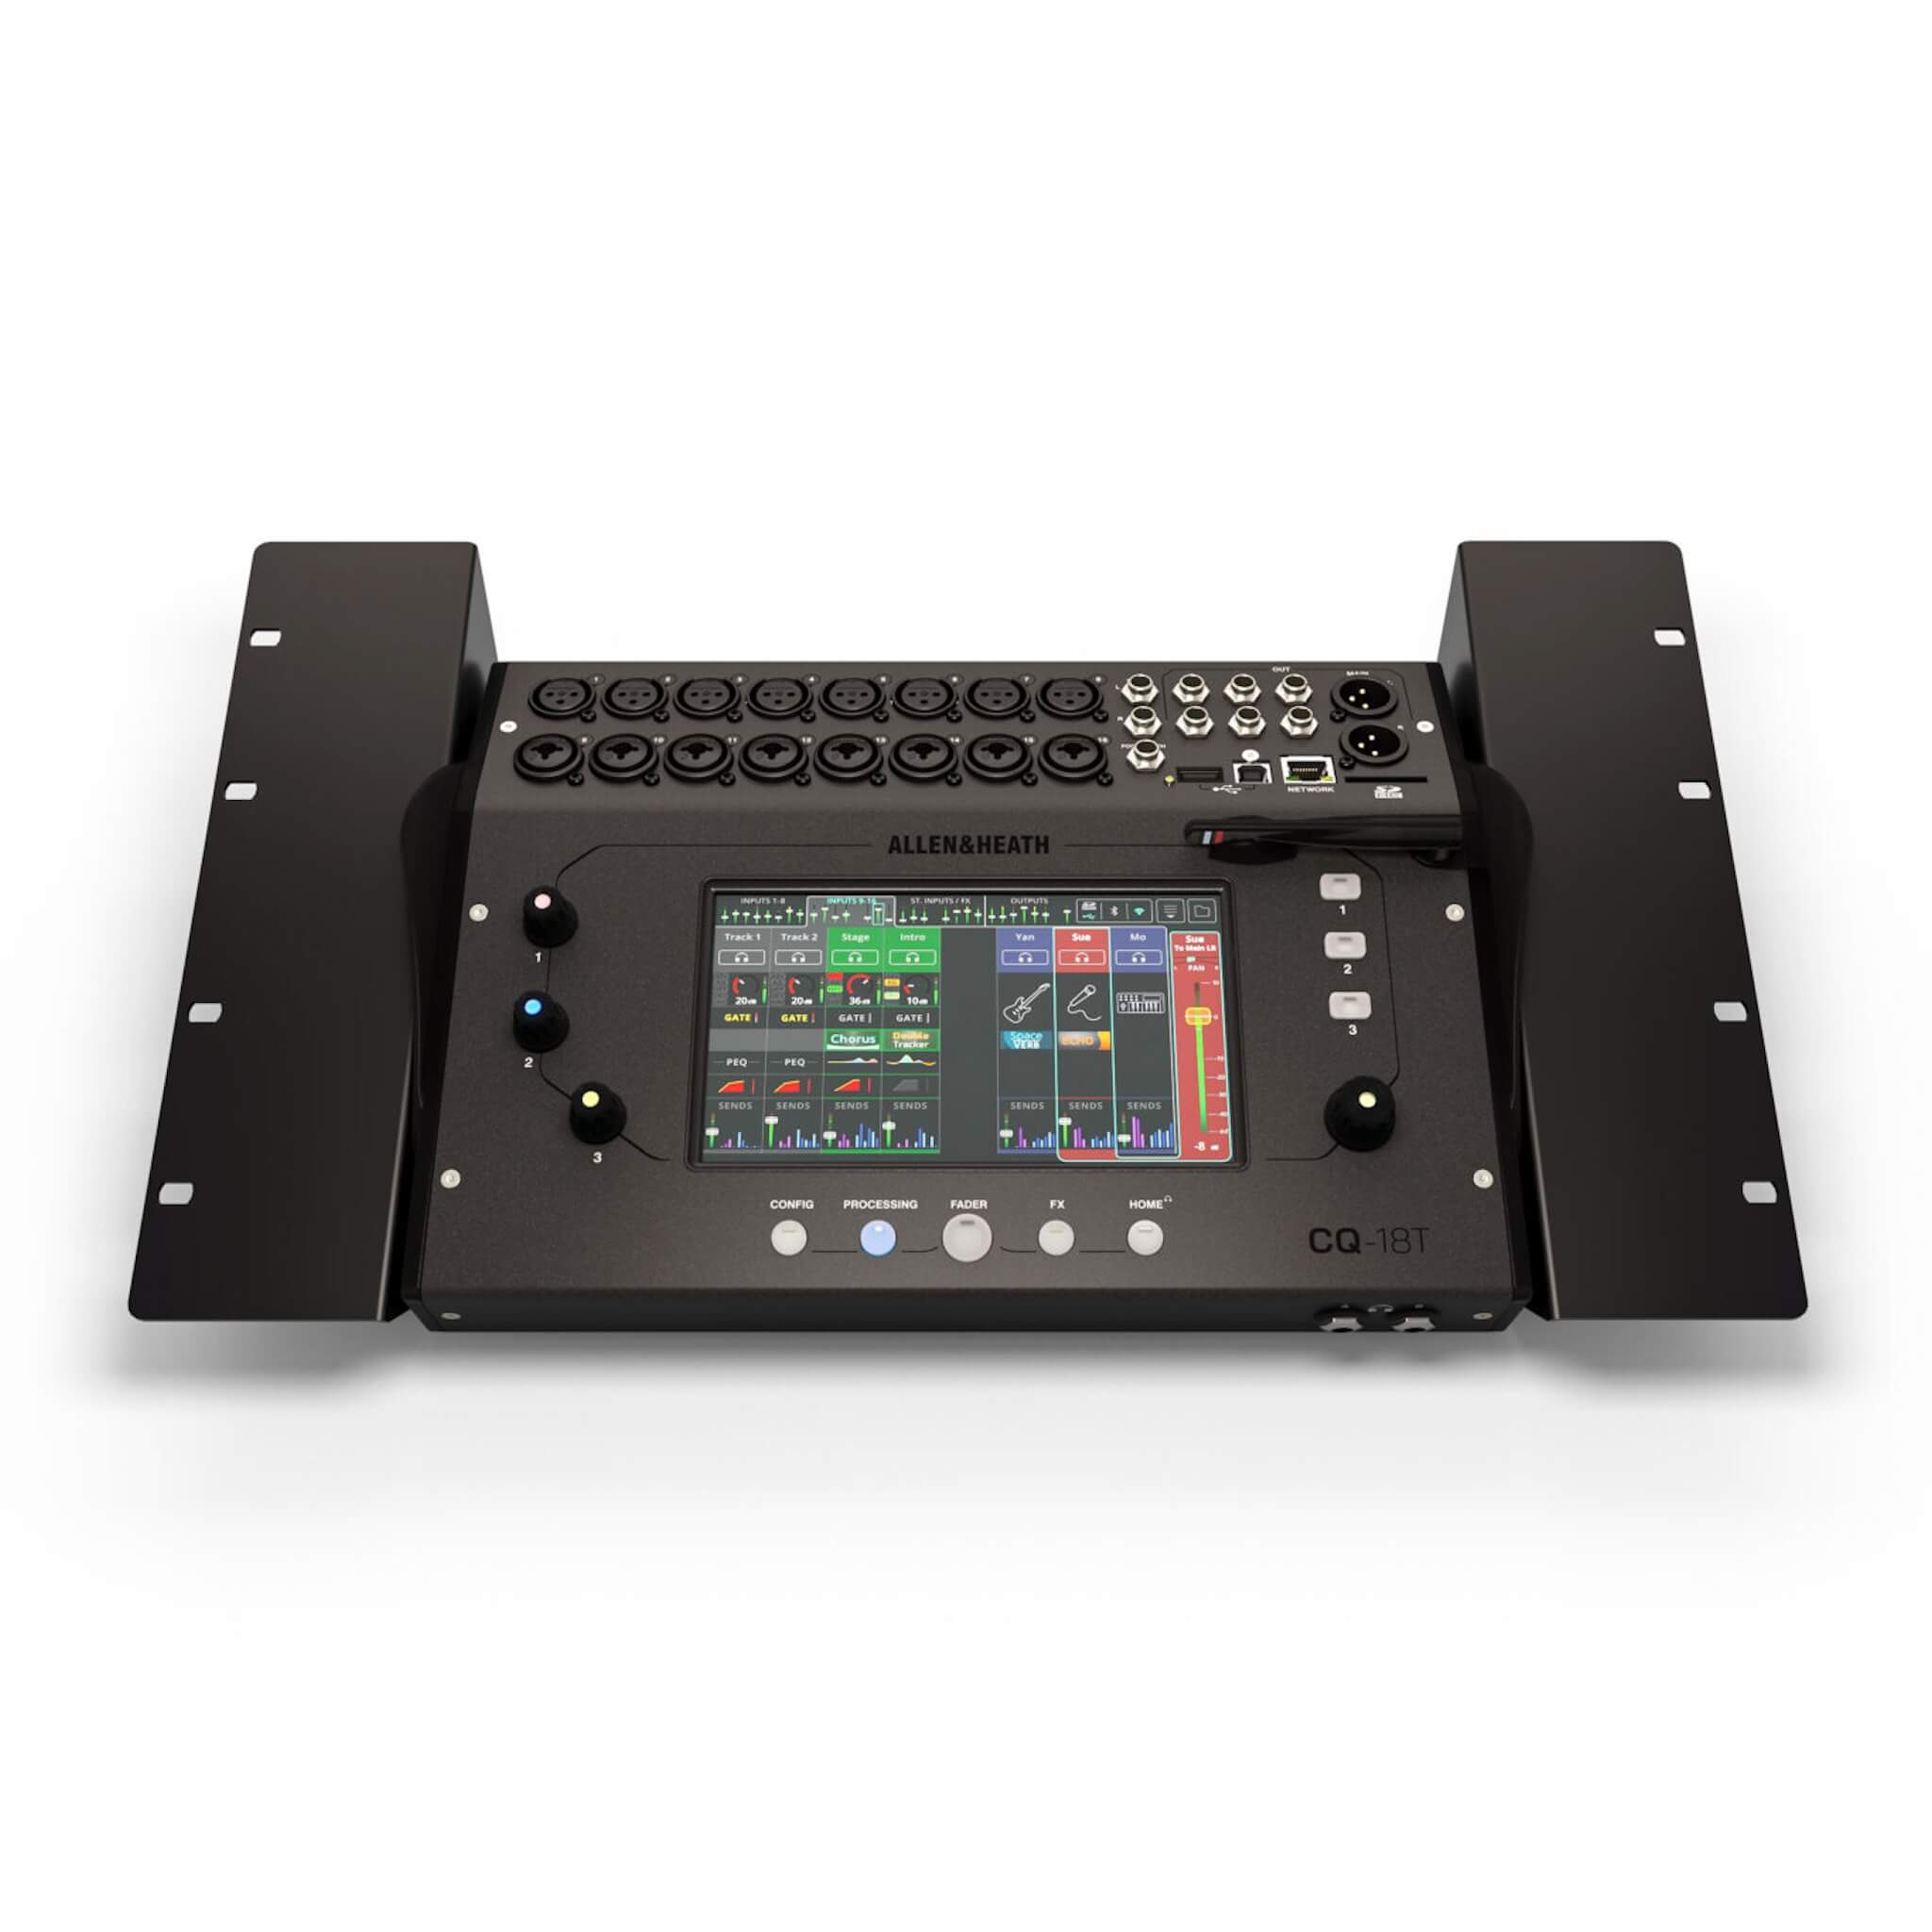 Allen & Heath CQ18T-RK19 - Rackmount Kit for CQ-18T Digital Mixer, mounted